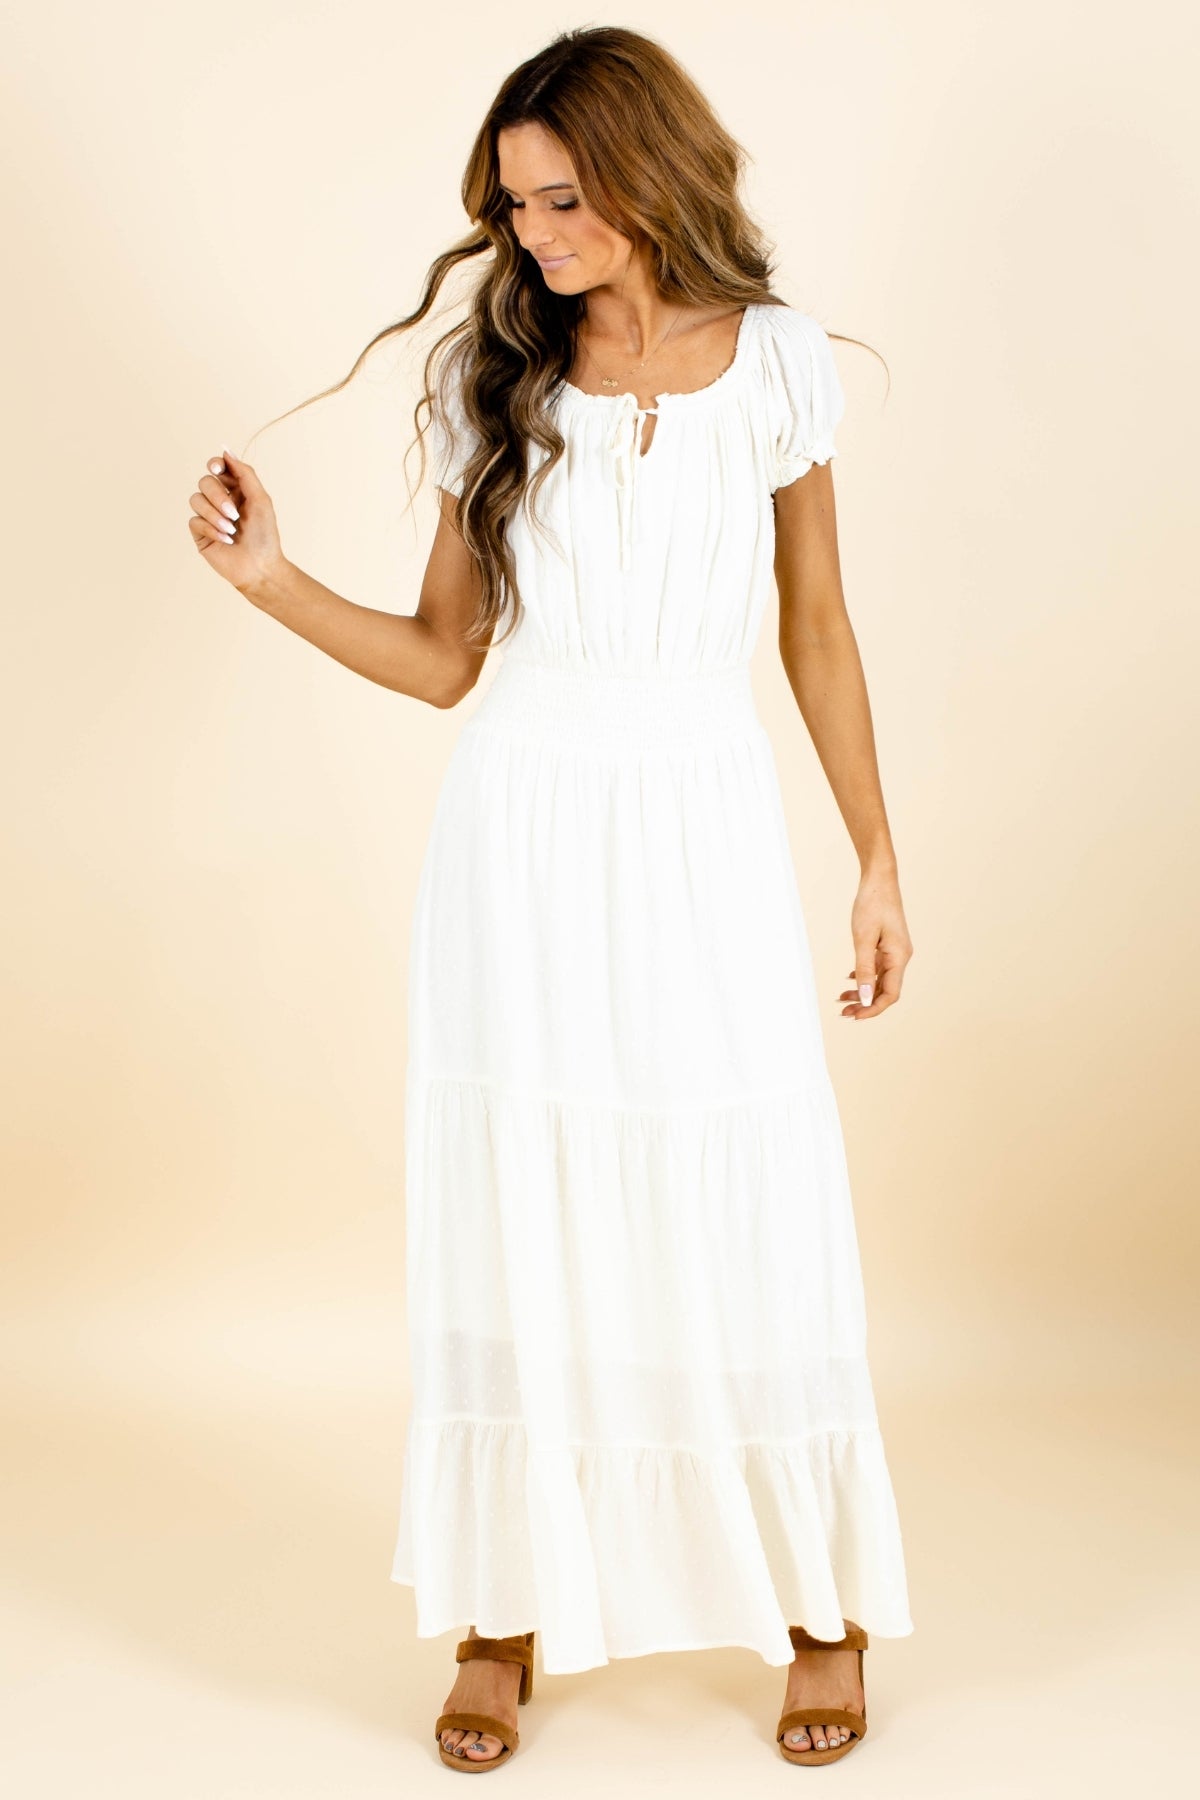 Cream white dress